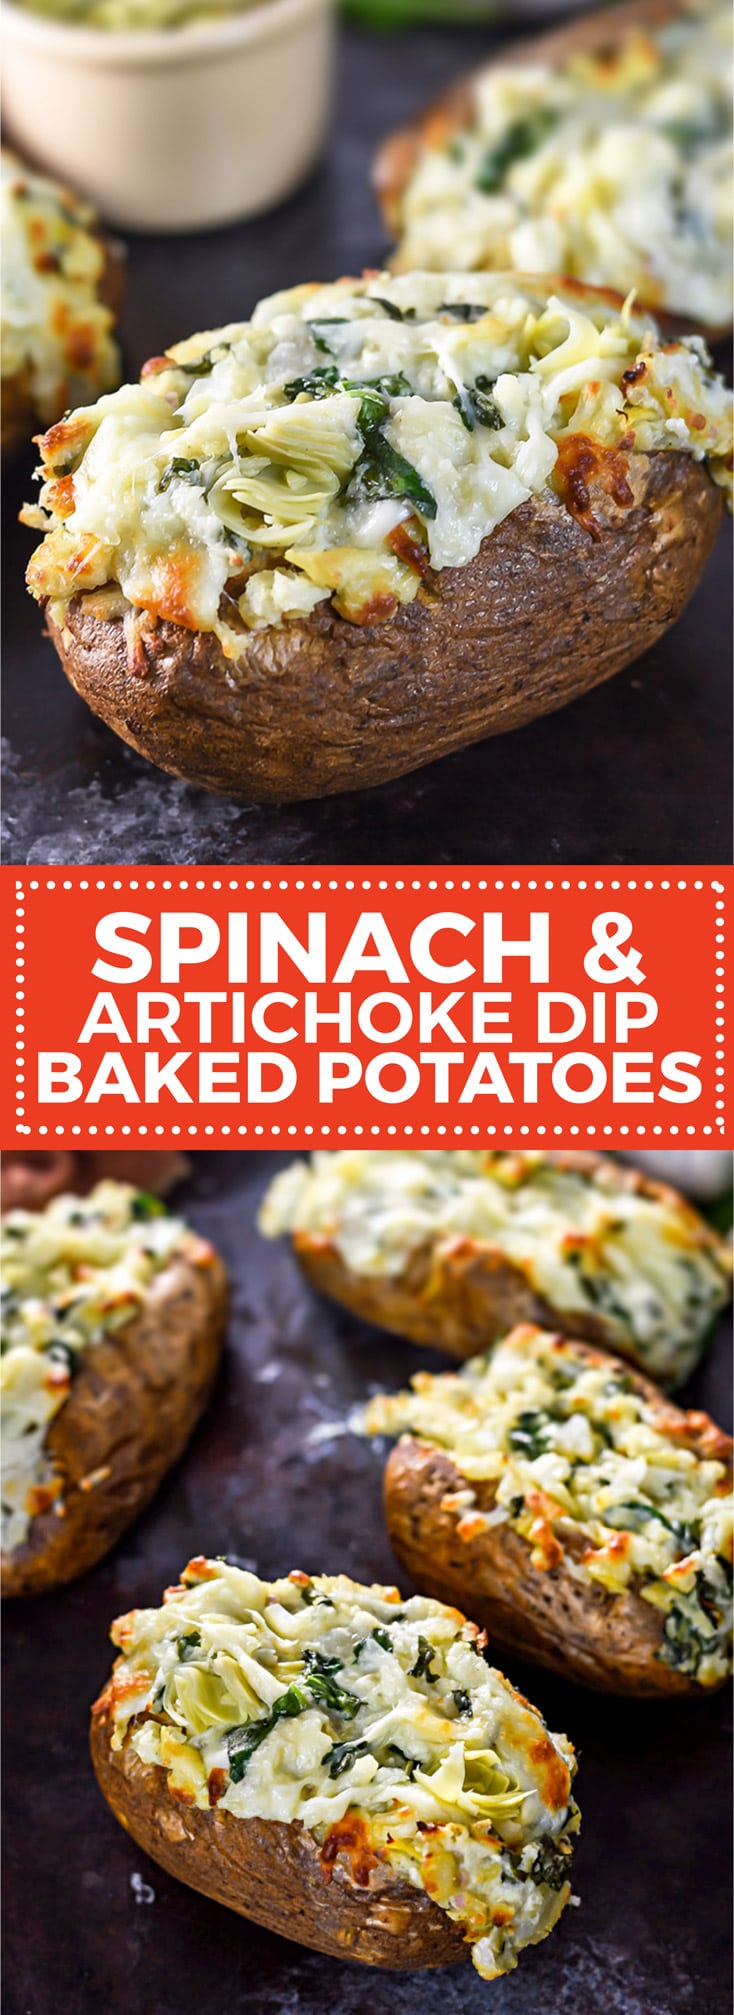 Spinach and Artichoke Dip Baked Potatoes. Hearty baked potatoes with a creamy, cheesy spinach and artichoke dip filling. | hostthetoast.com